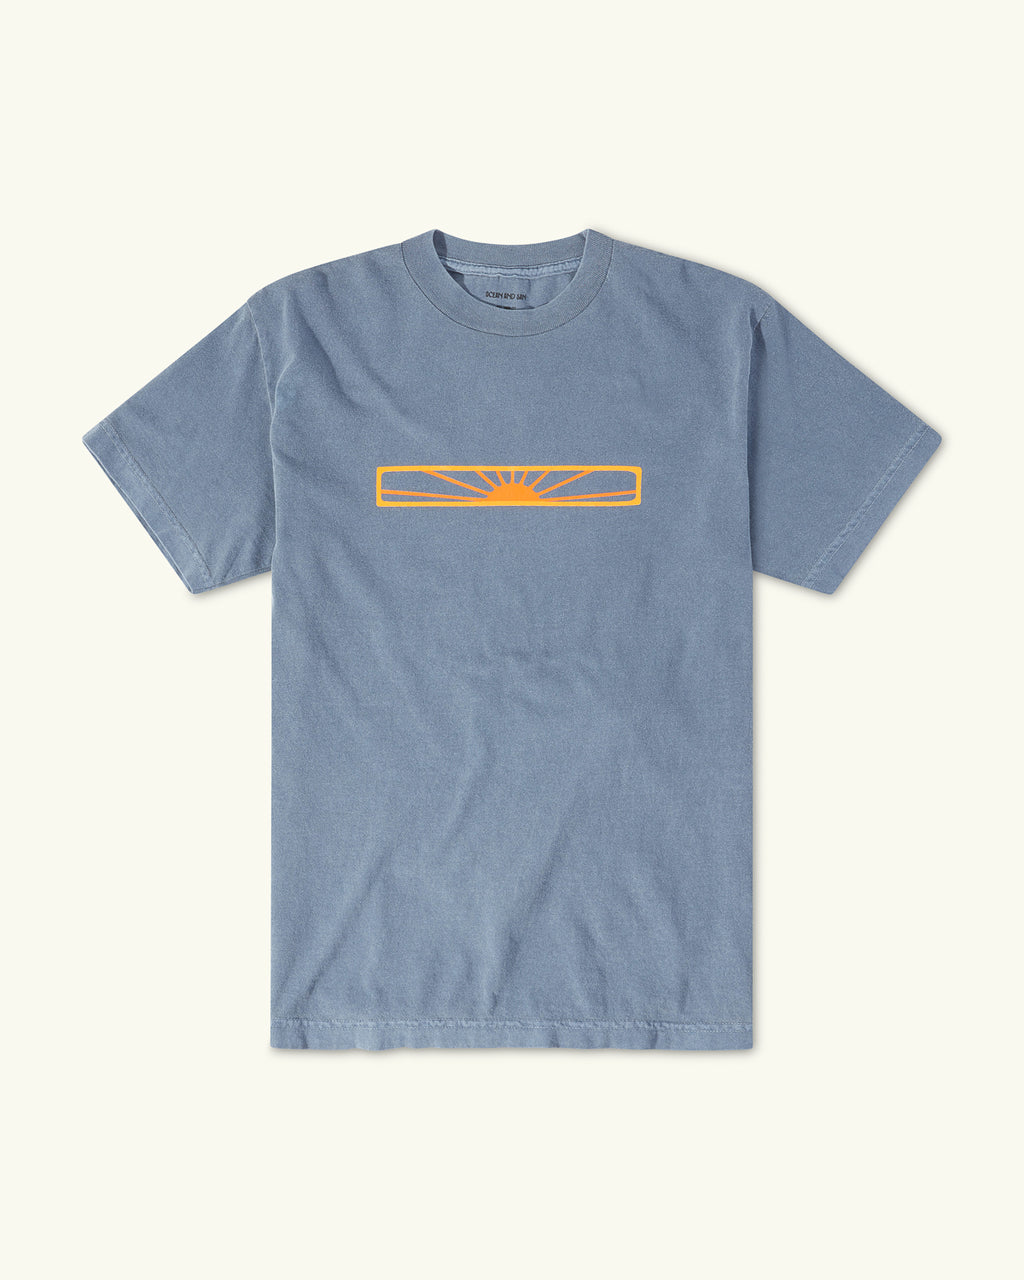 Vintage T Shirt - Rising Sun Edition